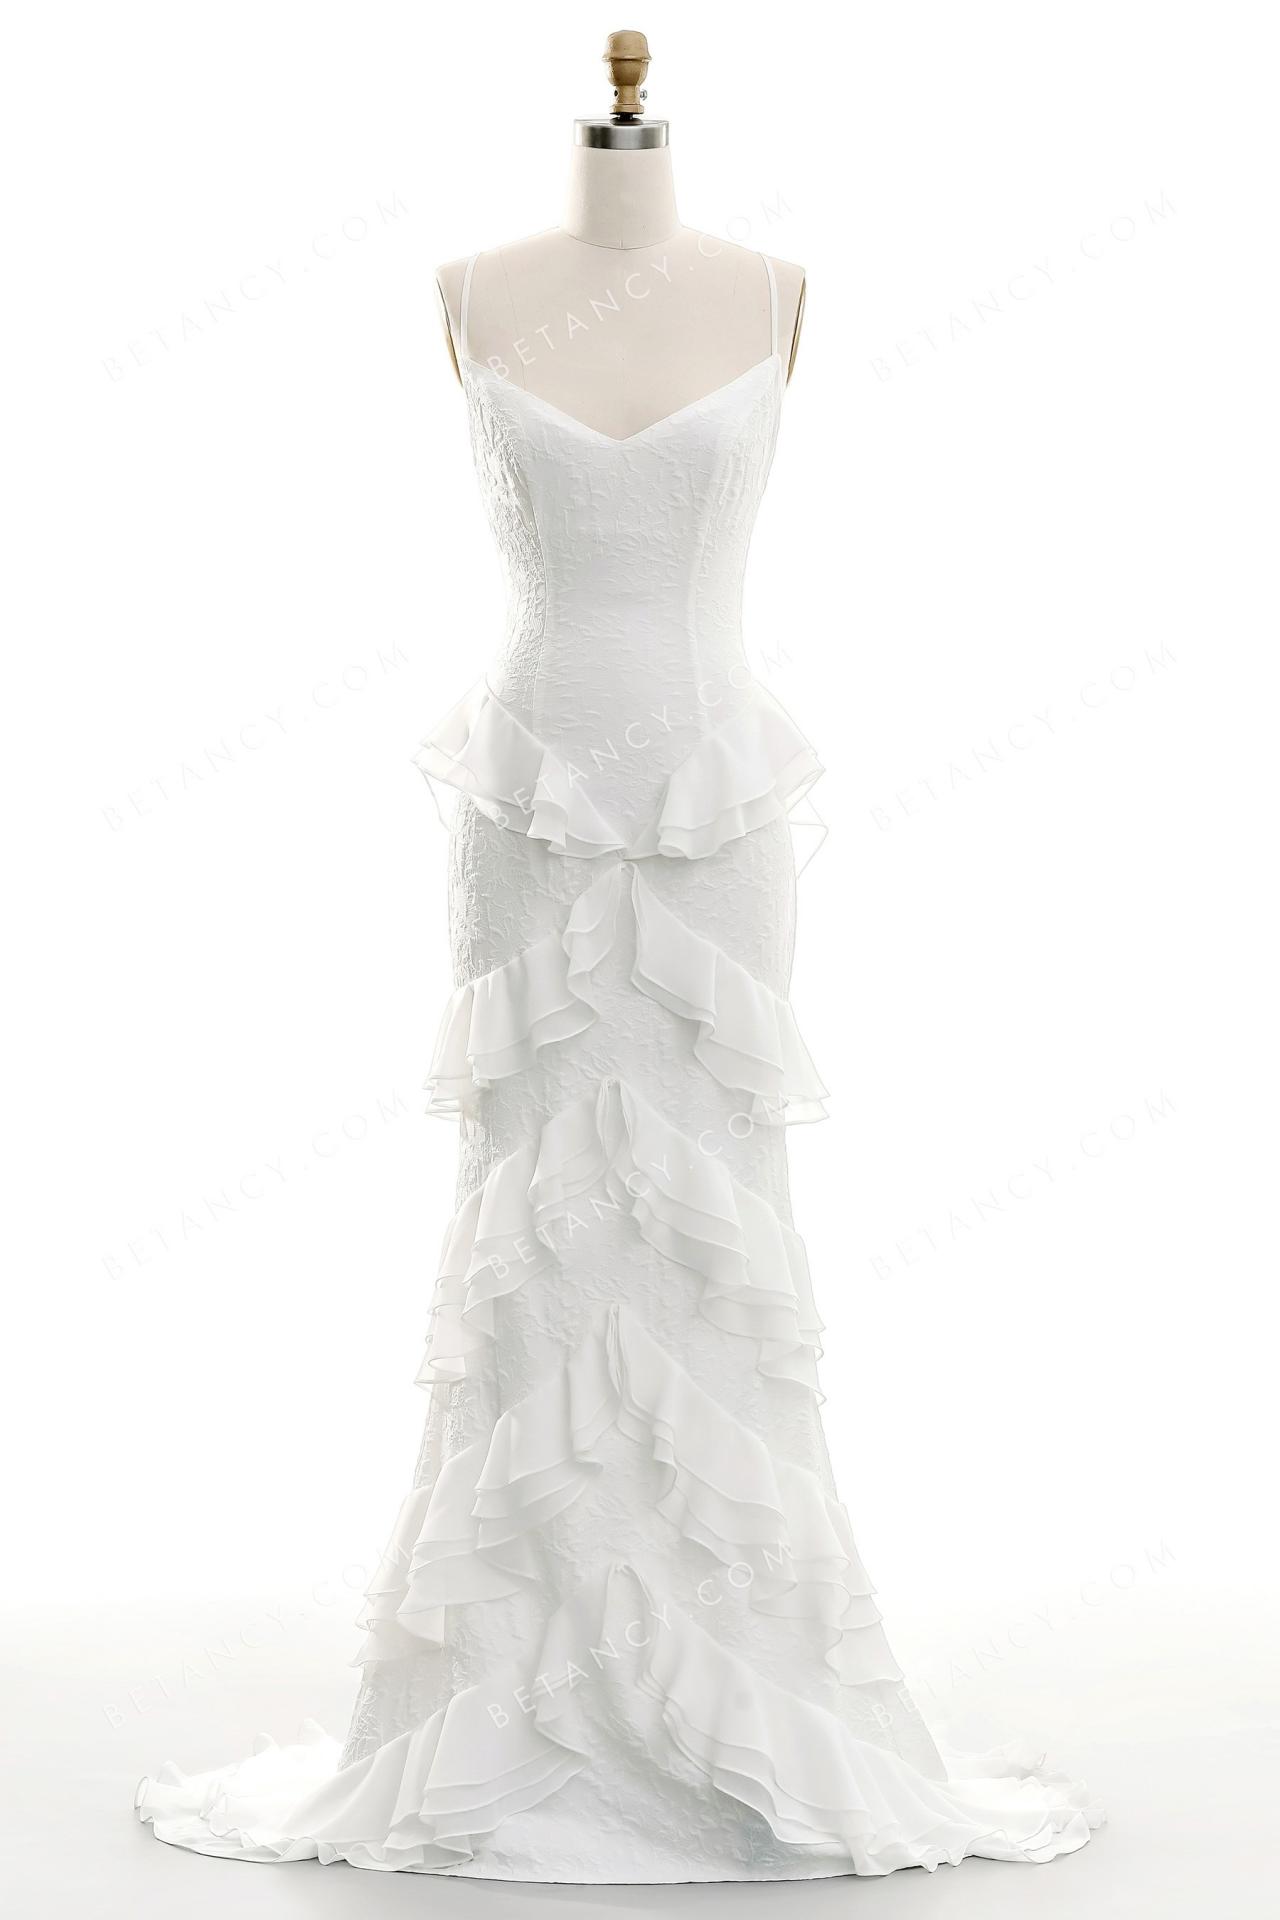 Simple yet chic bodice with spaghetti strap v neckline wedding dress 4